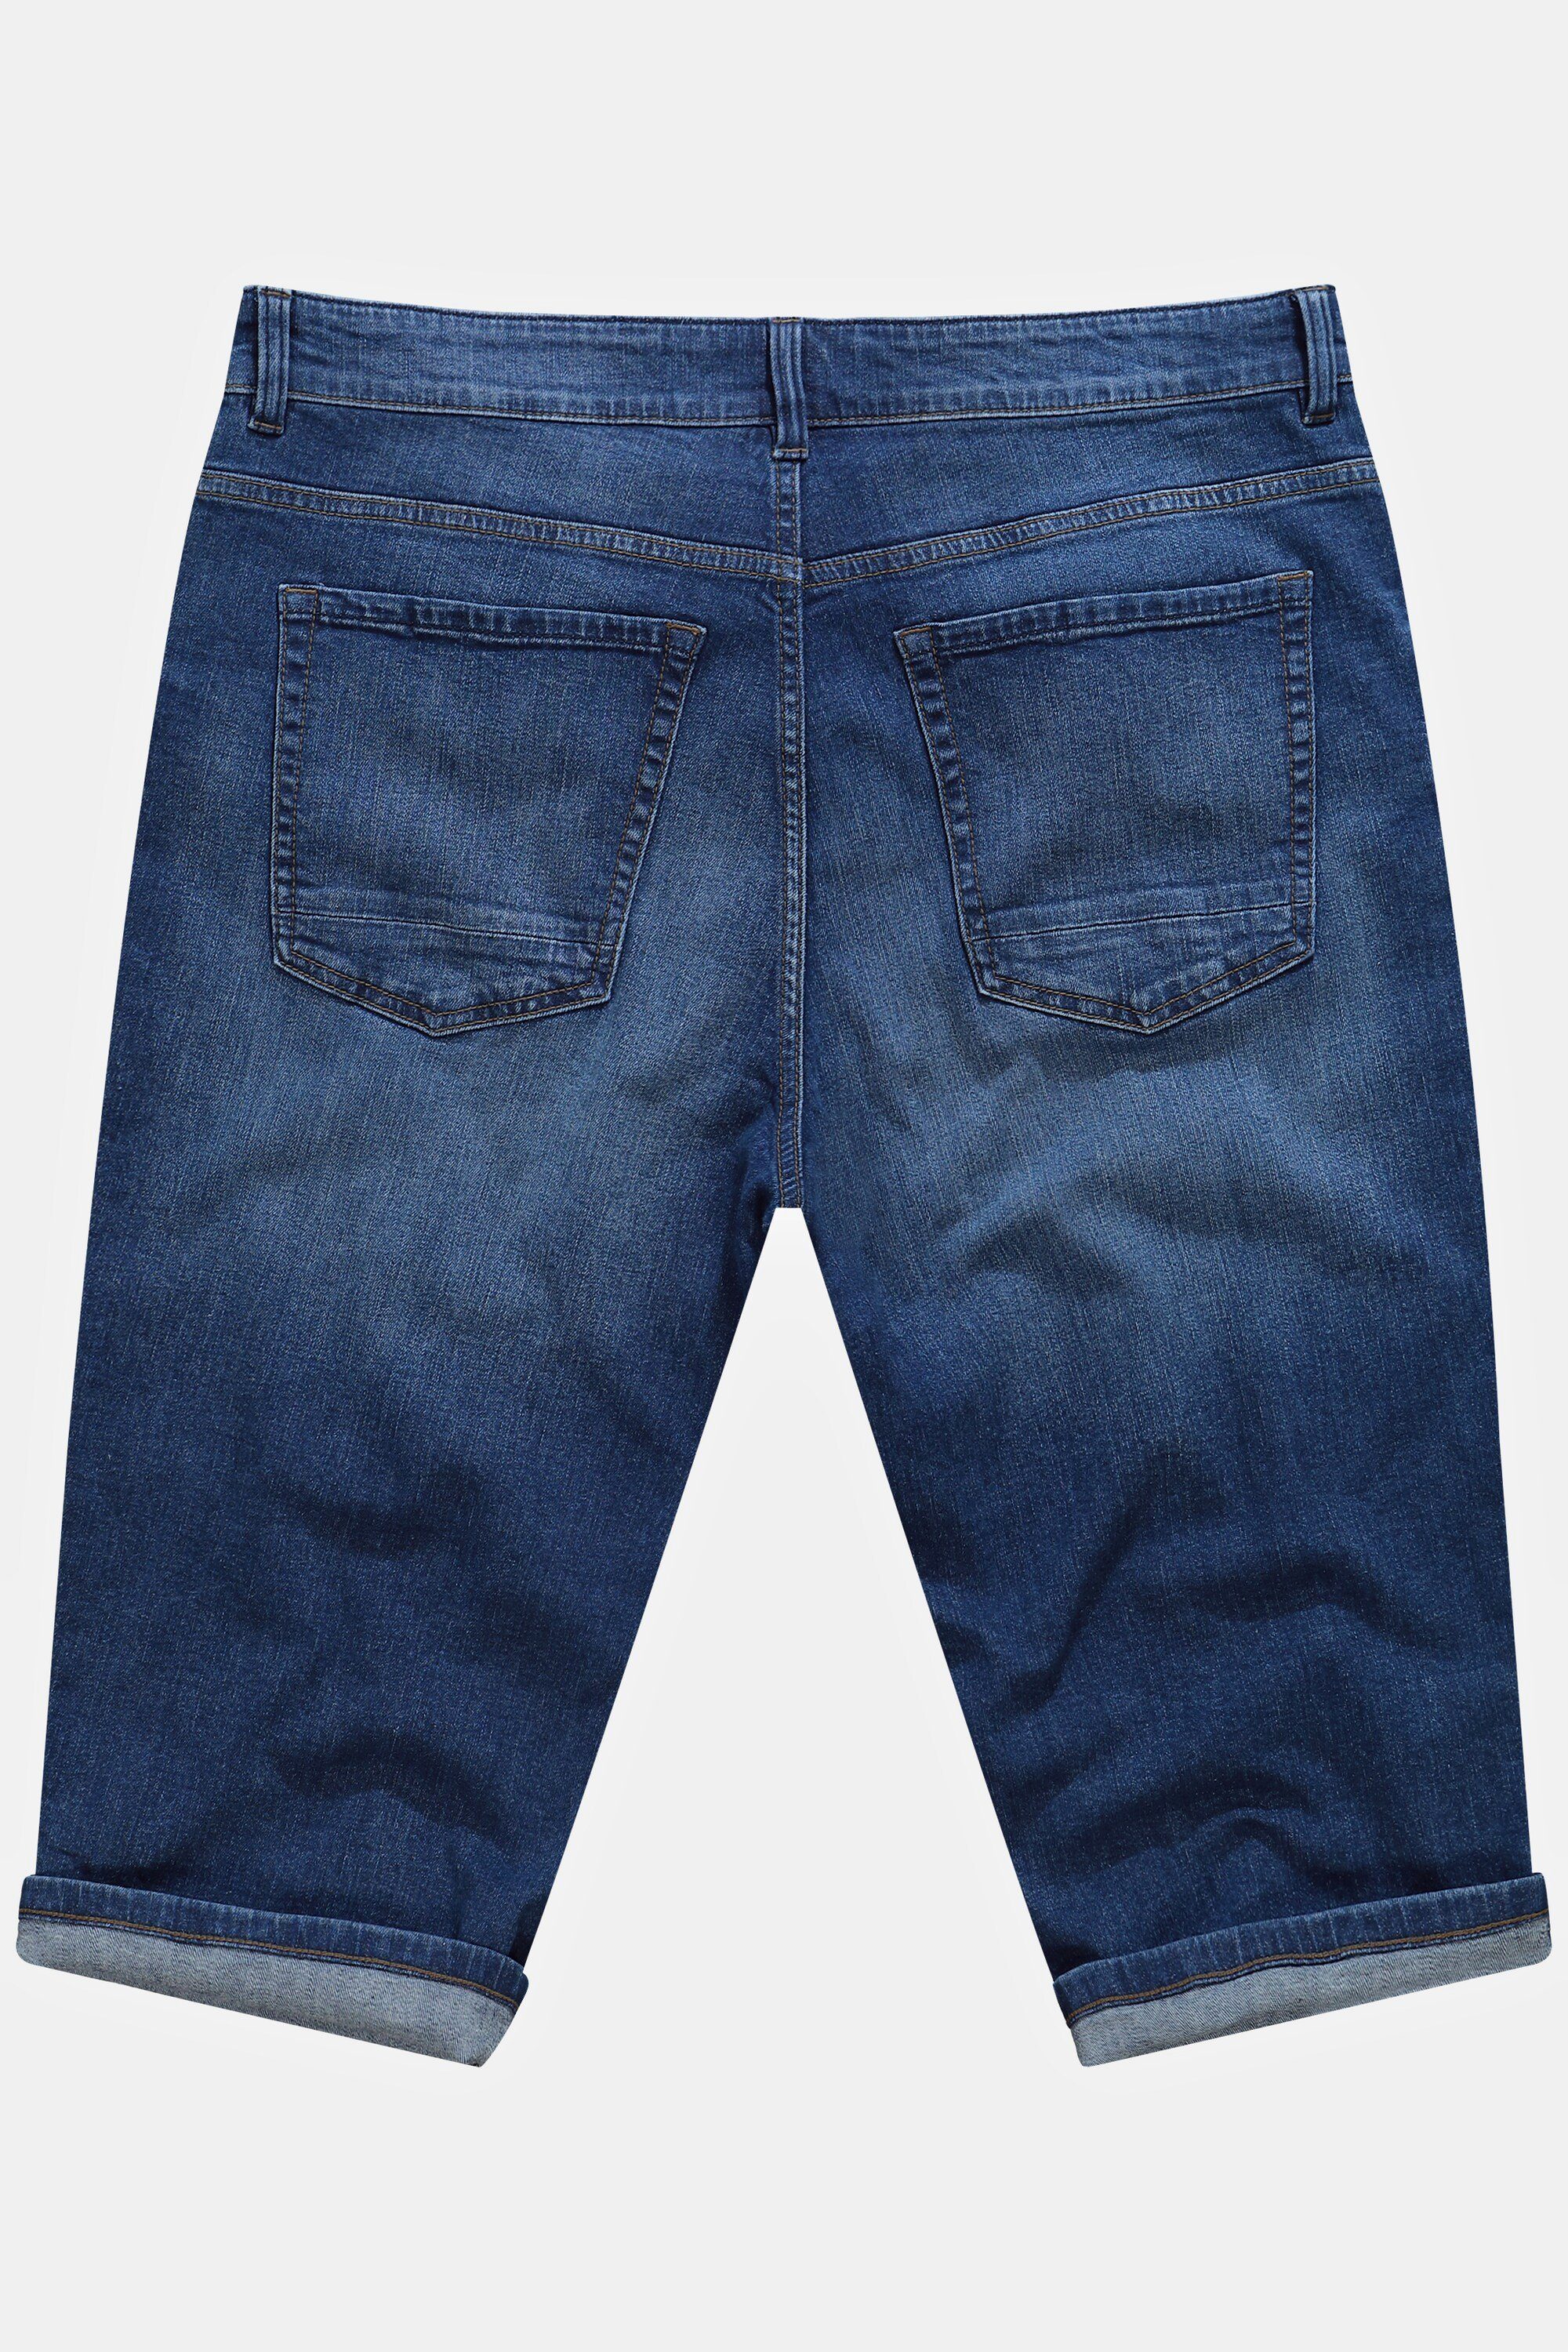 dark JP1880 3/4-Jeans blue denim 5-Pocket Jeansbermudas Powerstretch